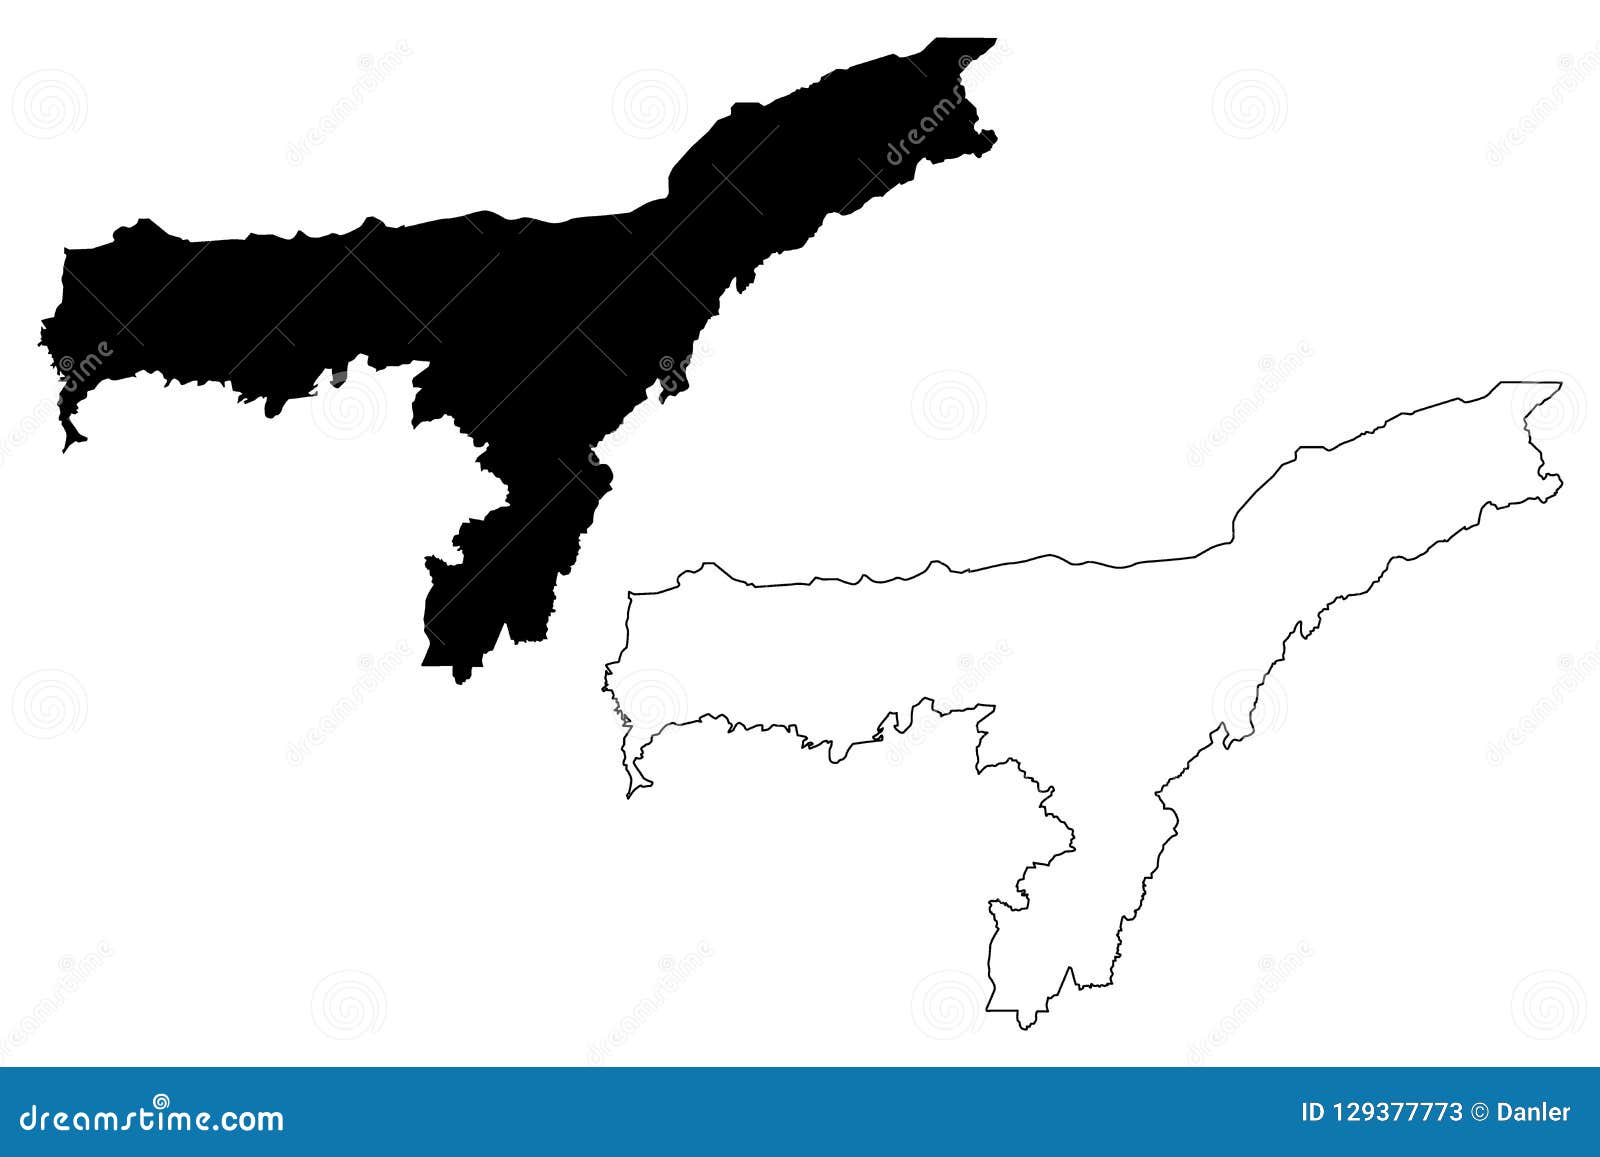 Create Custom Assam Map Chart with Online, Free Map Maker.